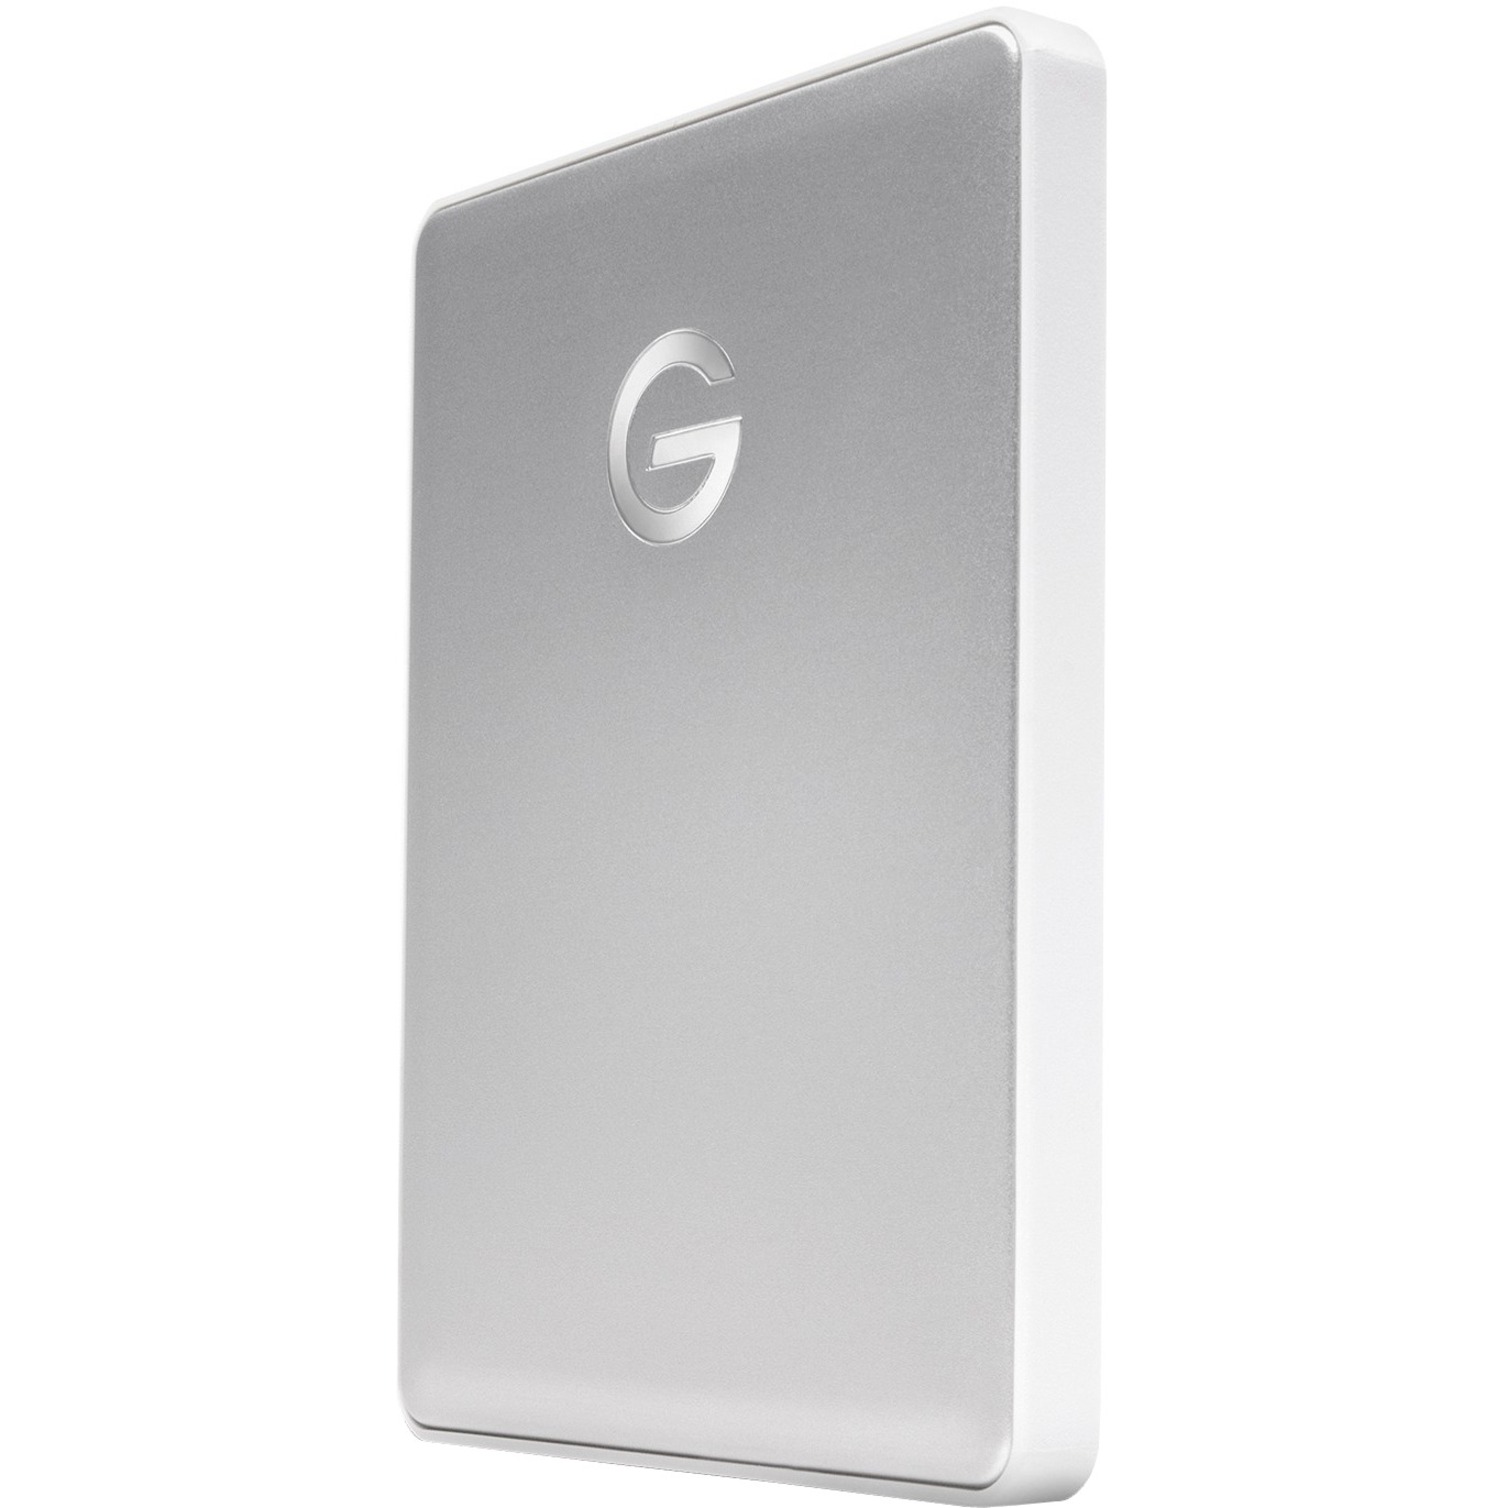 G-Technology G-DRIVE mobile USB-C 0G10339-1 2 TB Portable Hard Drive, 2.5" External, Silver - image 1 of 9